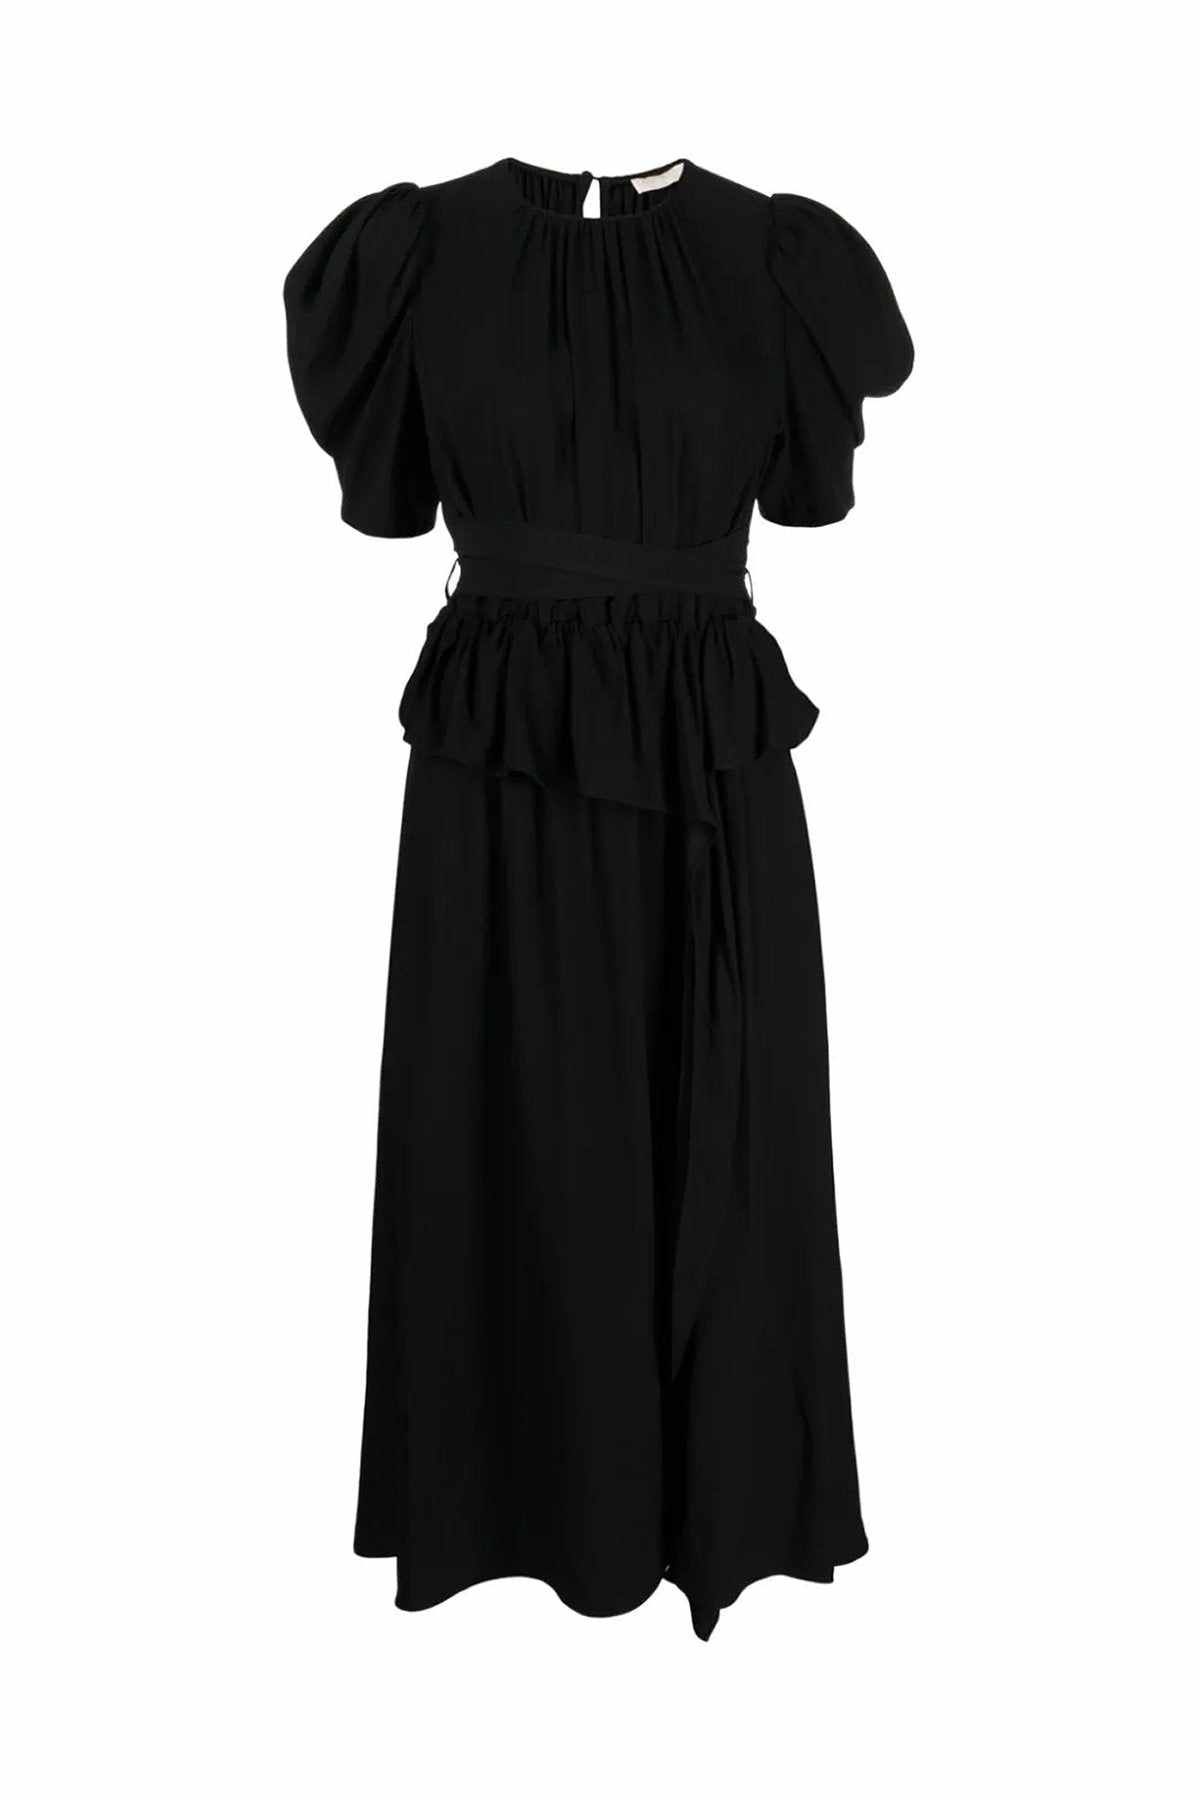 Marion Dress in Noir-Dress-Ulla Johnson-Debs Boutique